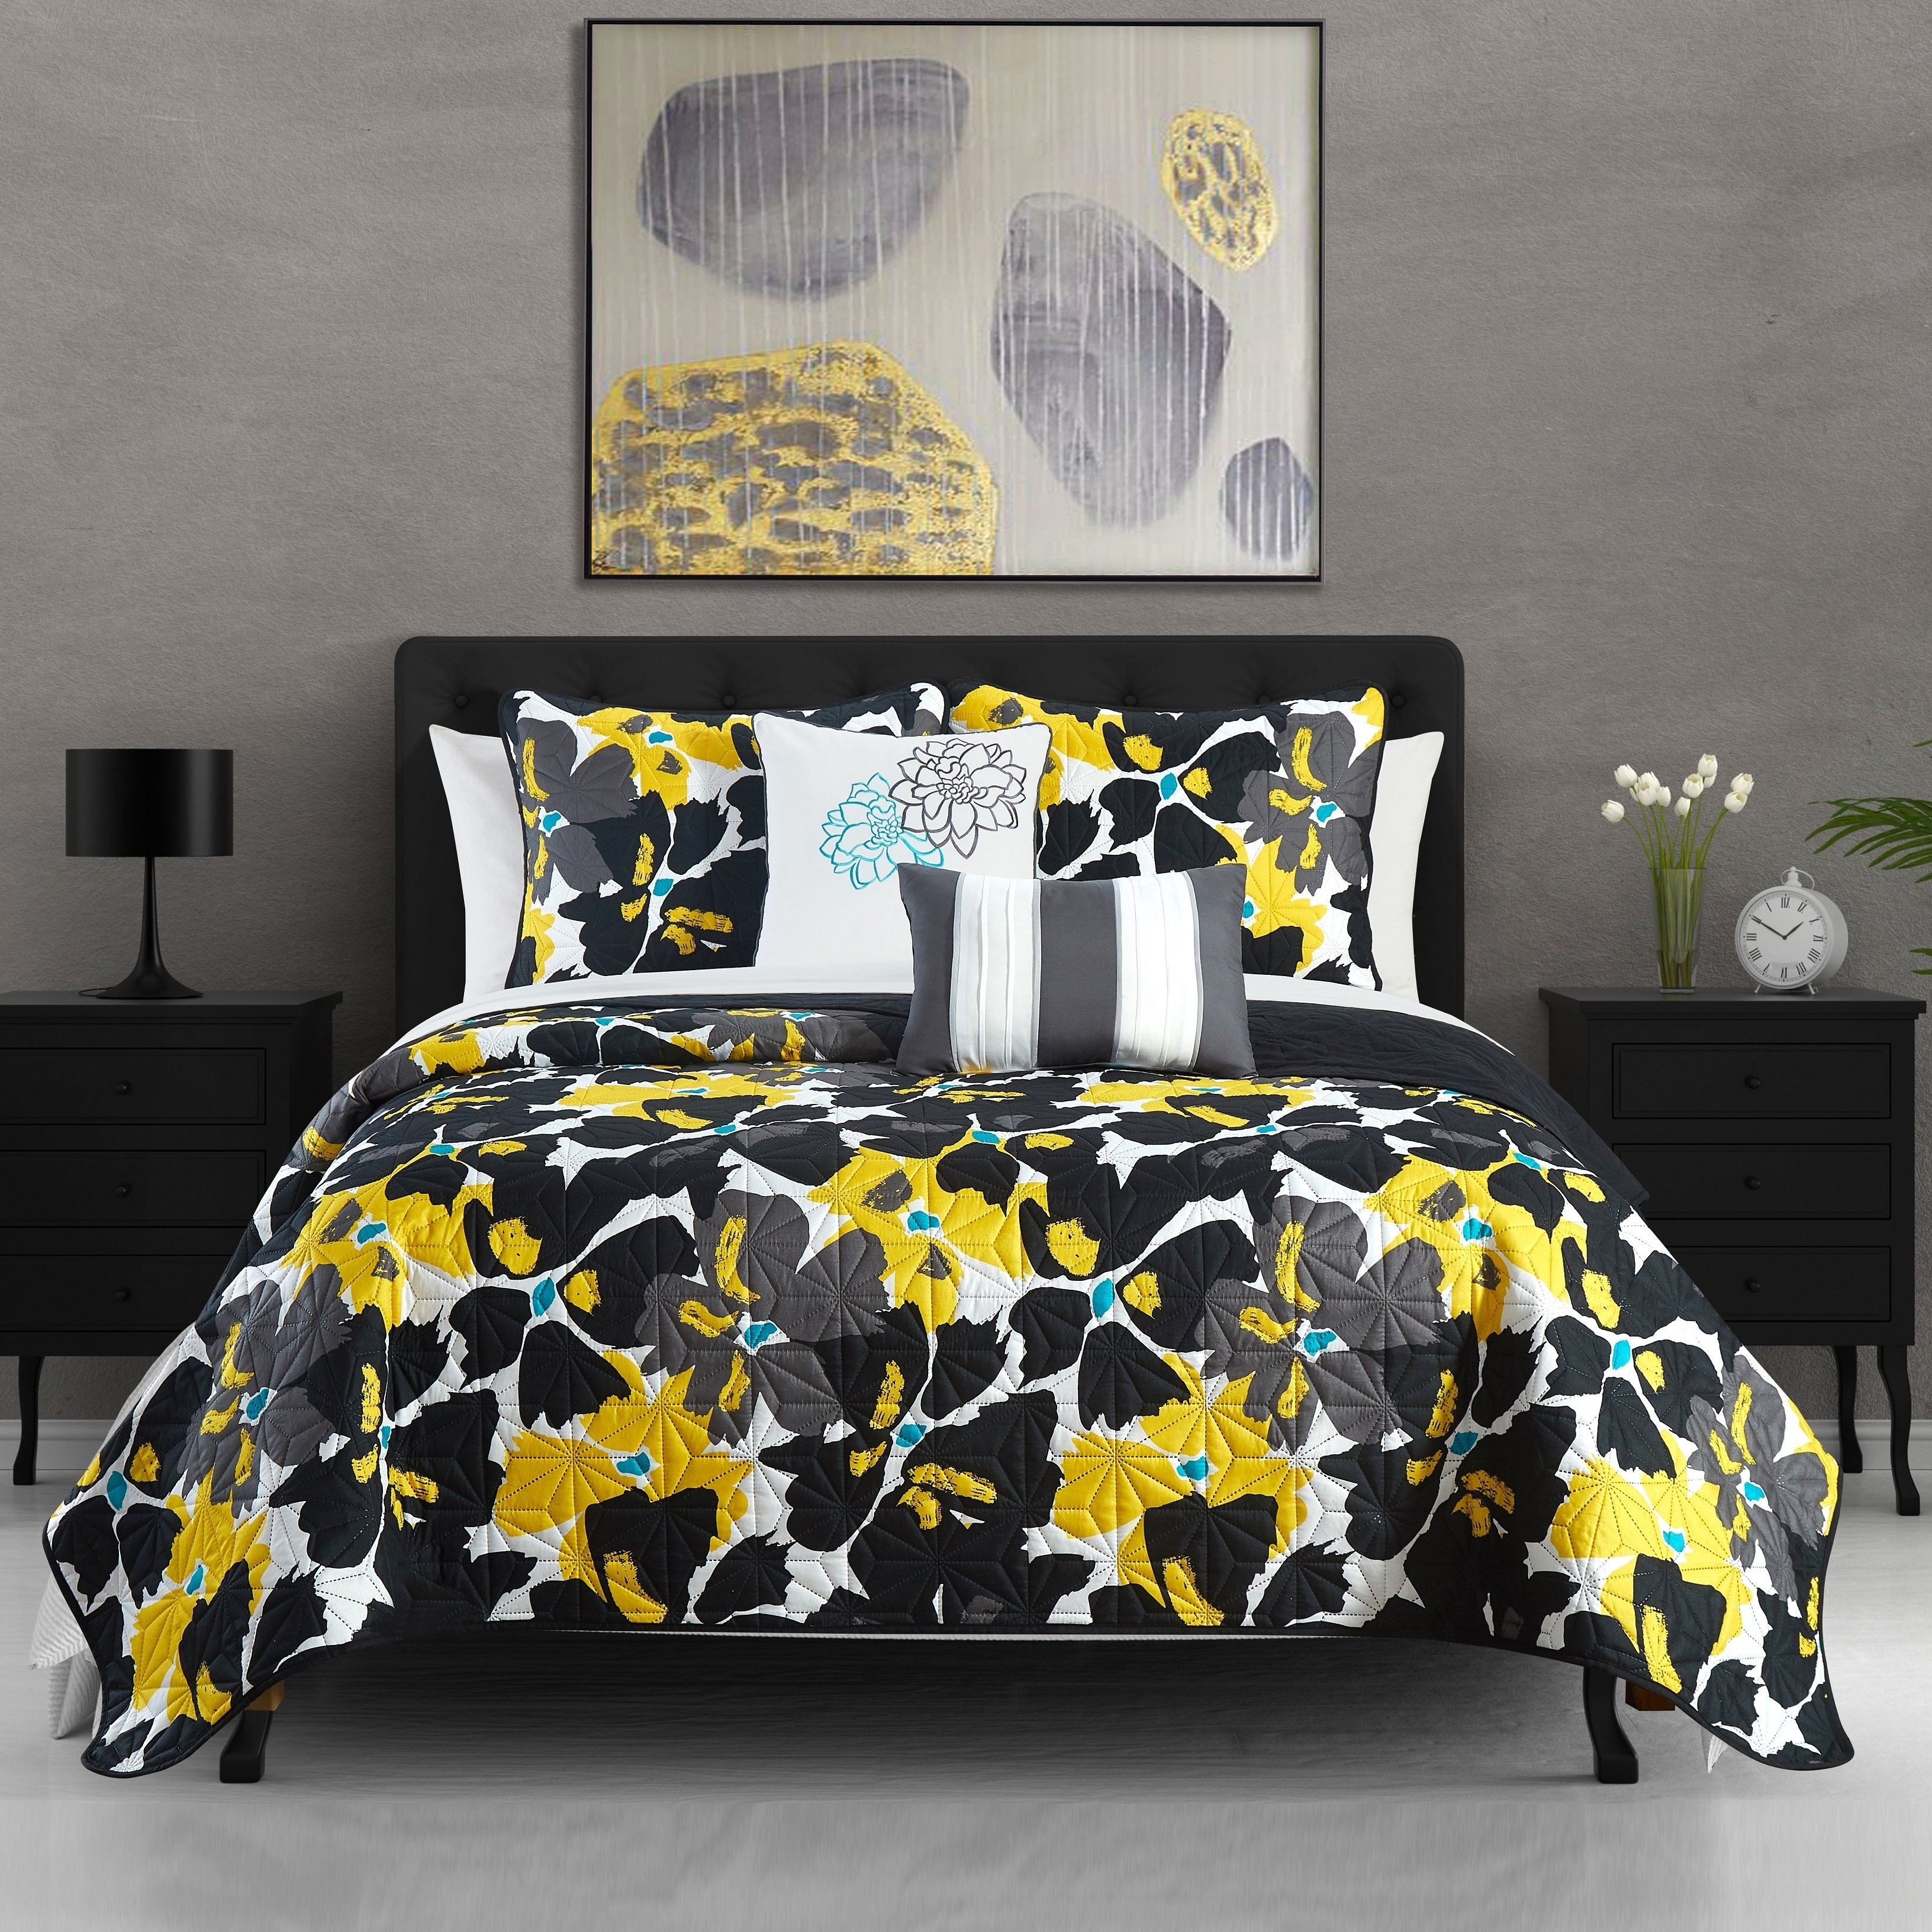 Aster 5 Piece Quilt Set Contemporary Floral Design Bedding - Black, King